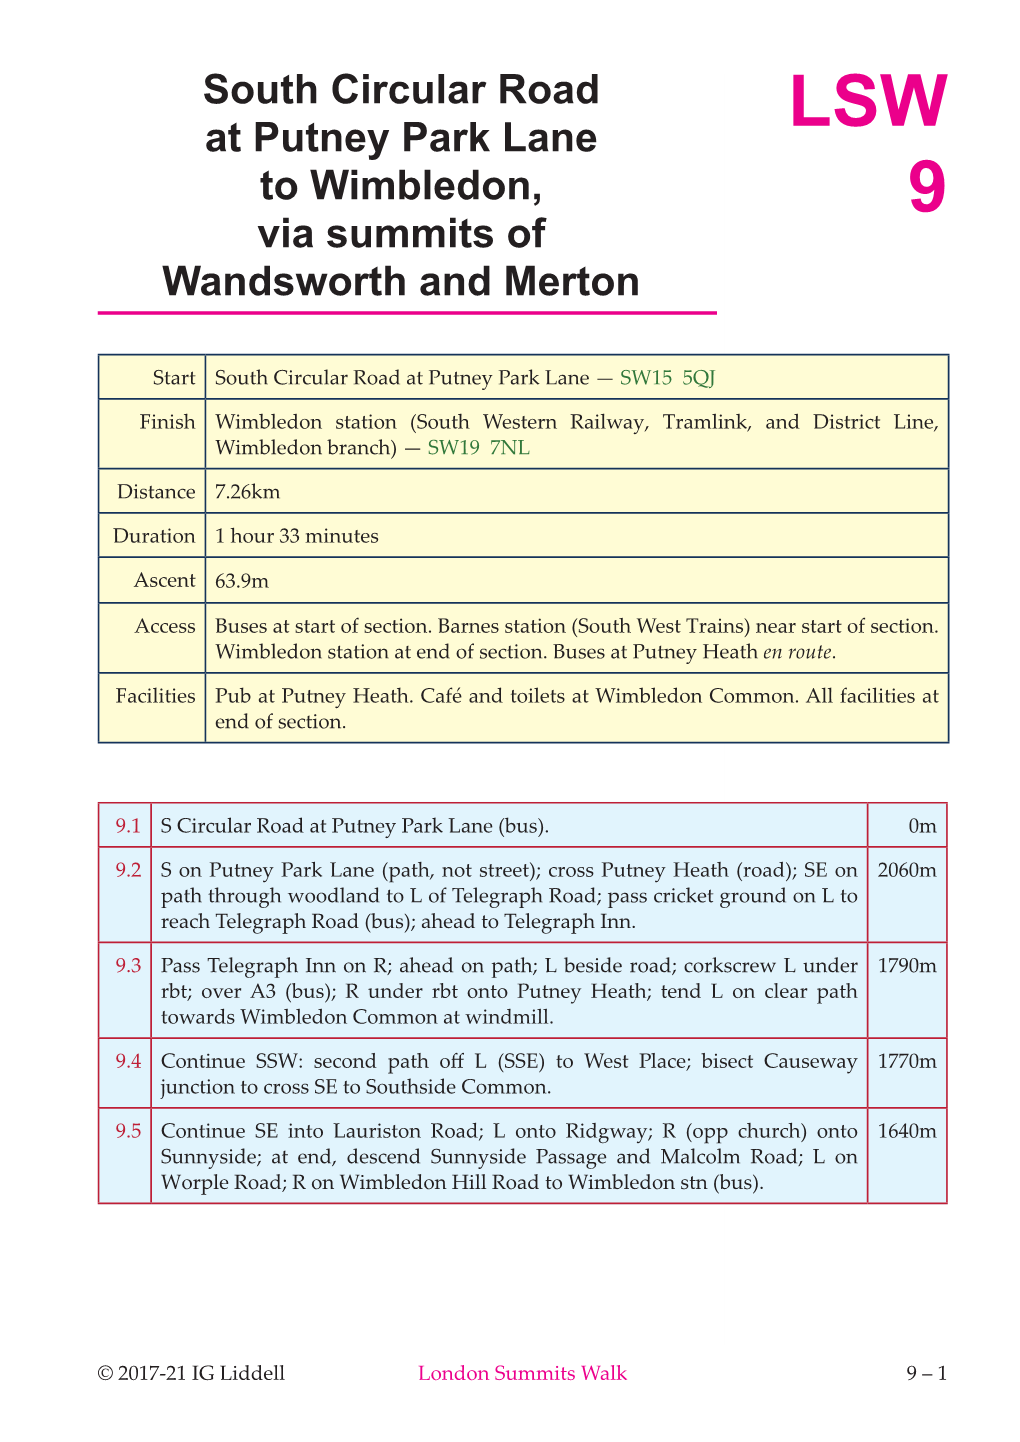 Putney Park Lane LSW to Wimbledon, 9 Via Summits of Wandsworth and Merton